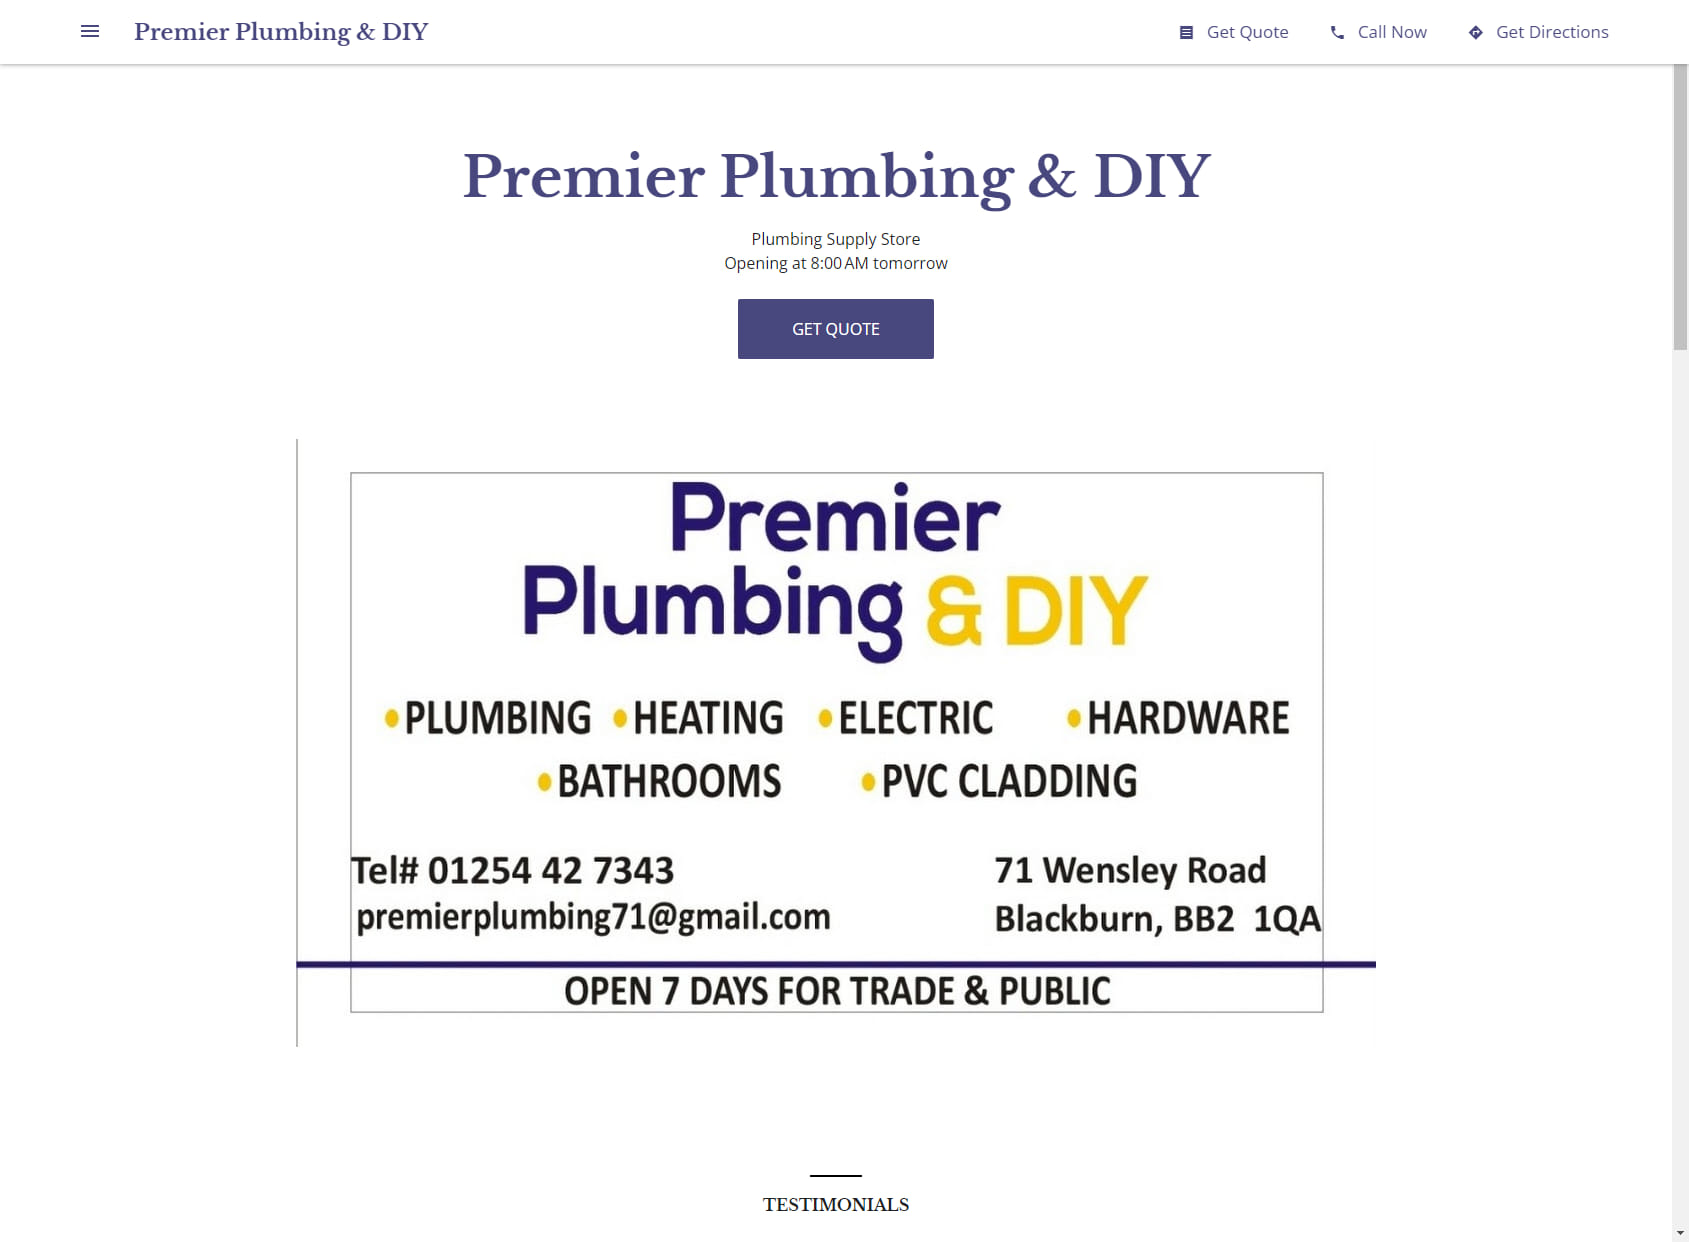 Premier Plumbing & DIY